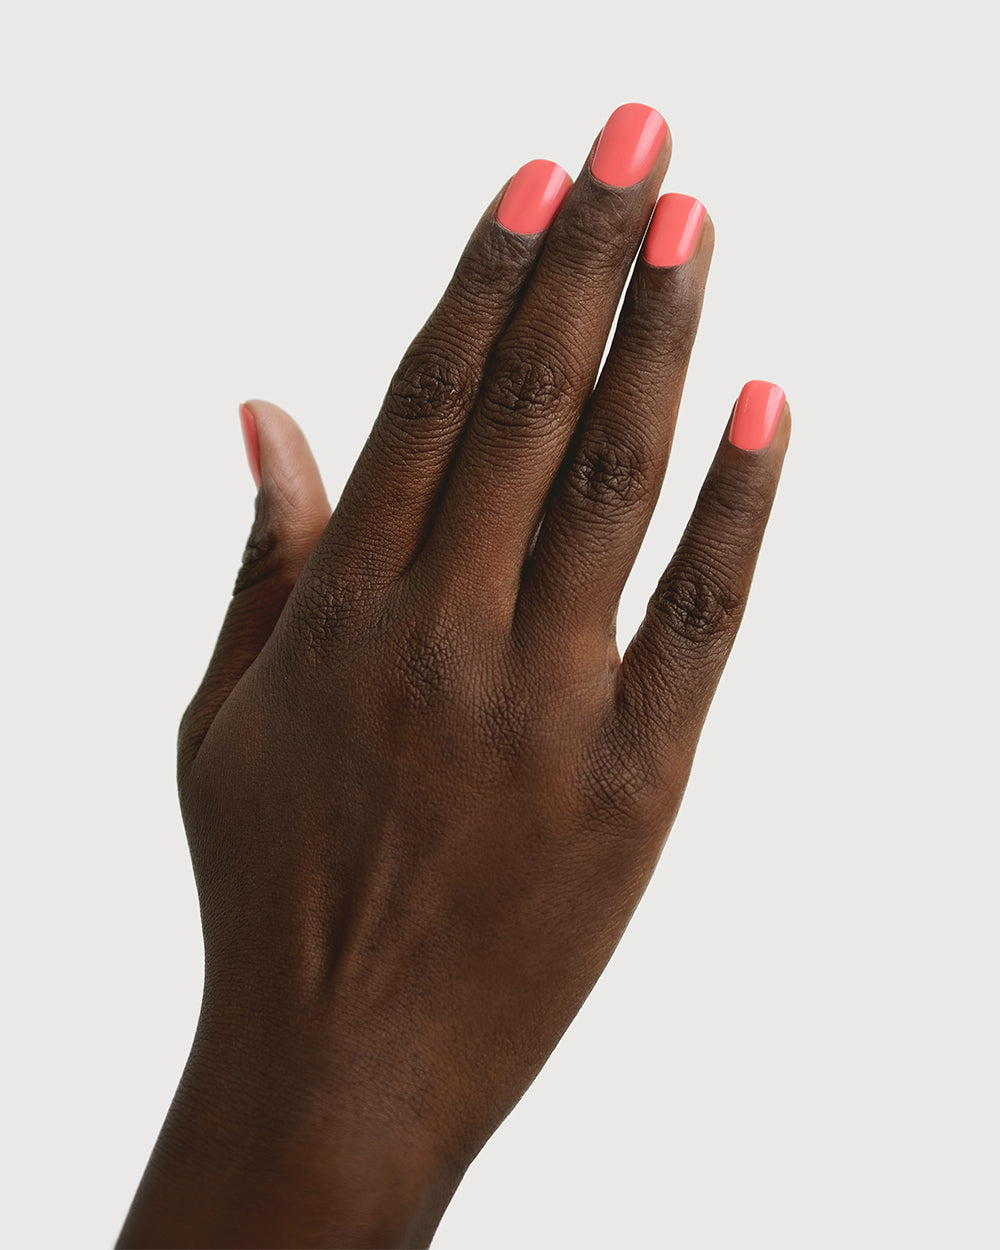 Grapefruit Pink nail polish swatch on dark Skin tone by Sienna Byron Bay